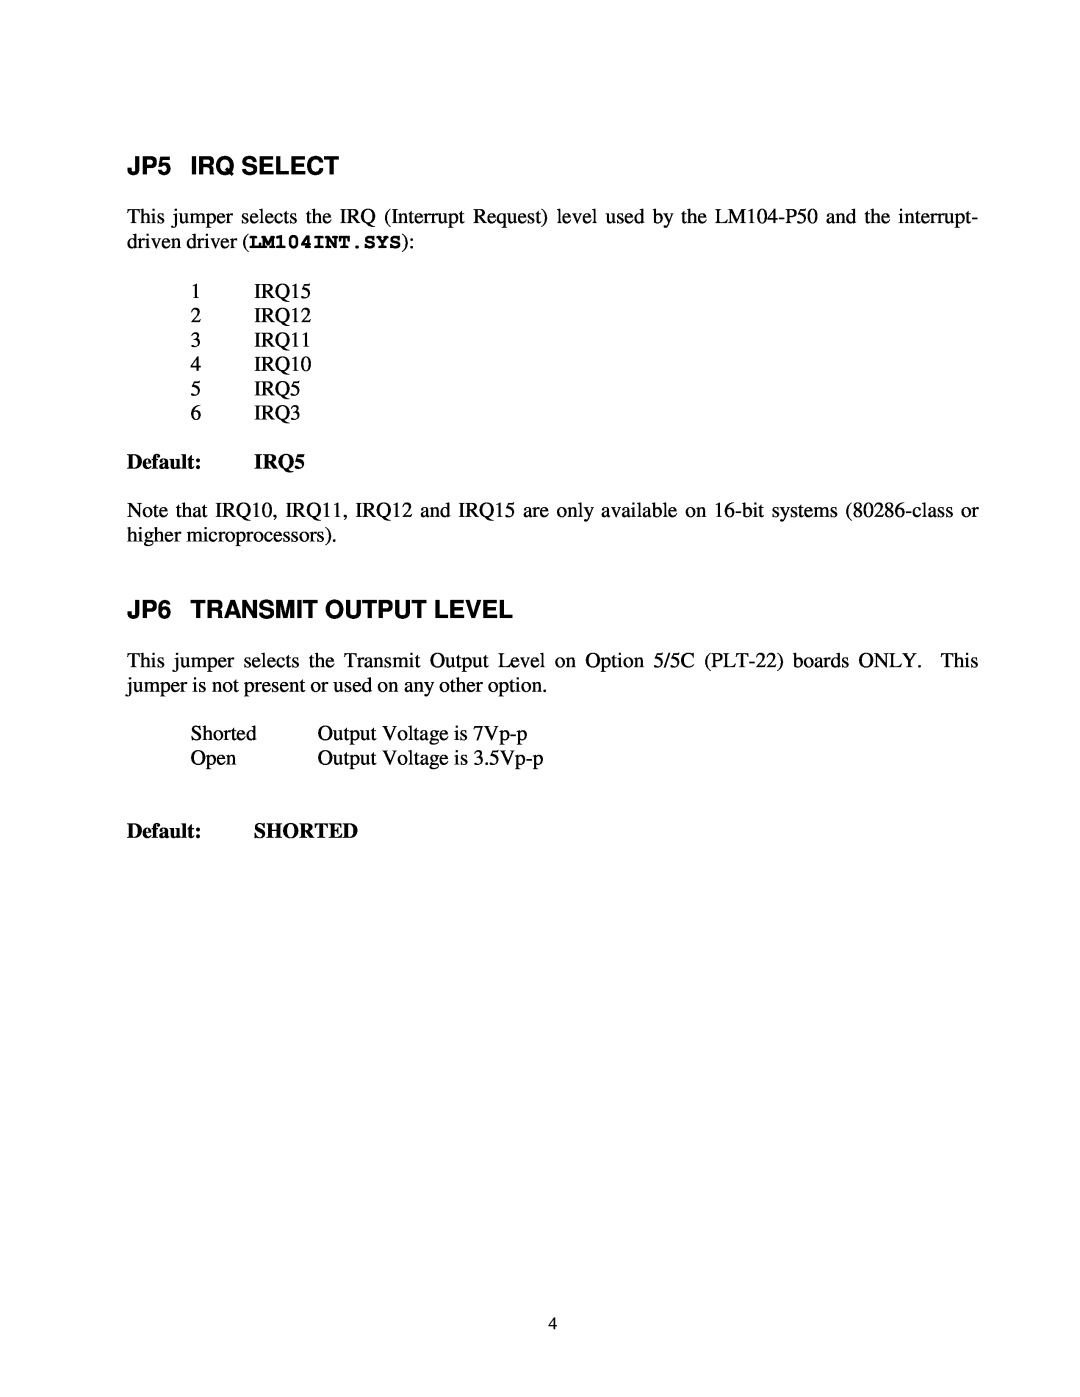 Vista LM104-P50 manual JP5 IRQ SELECT, JP6 TRANSMIT OUTPUT LEVEL 